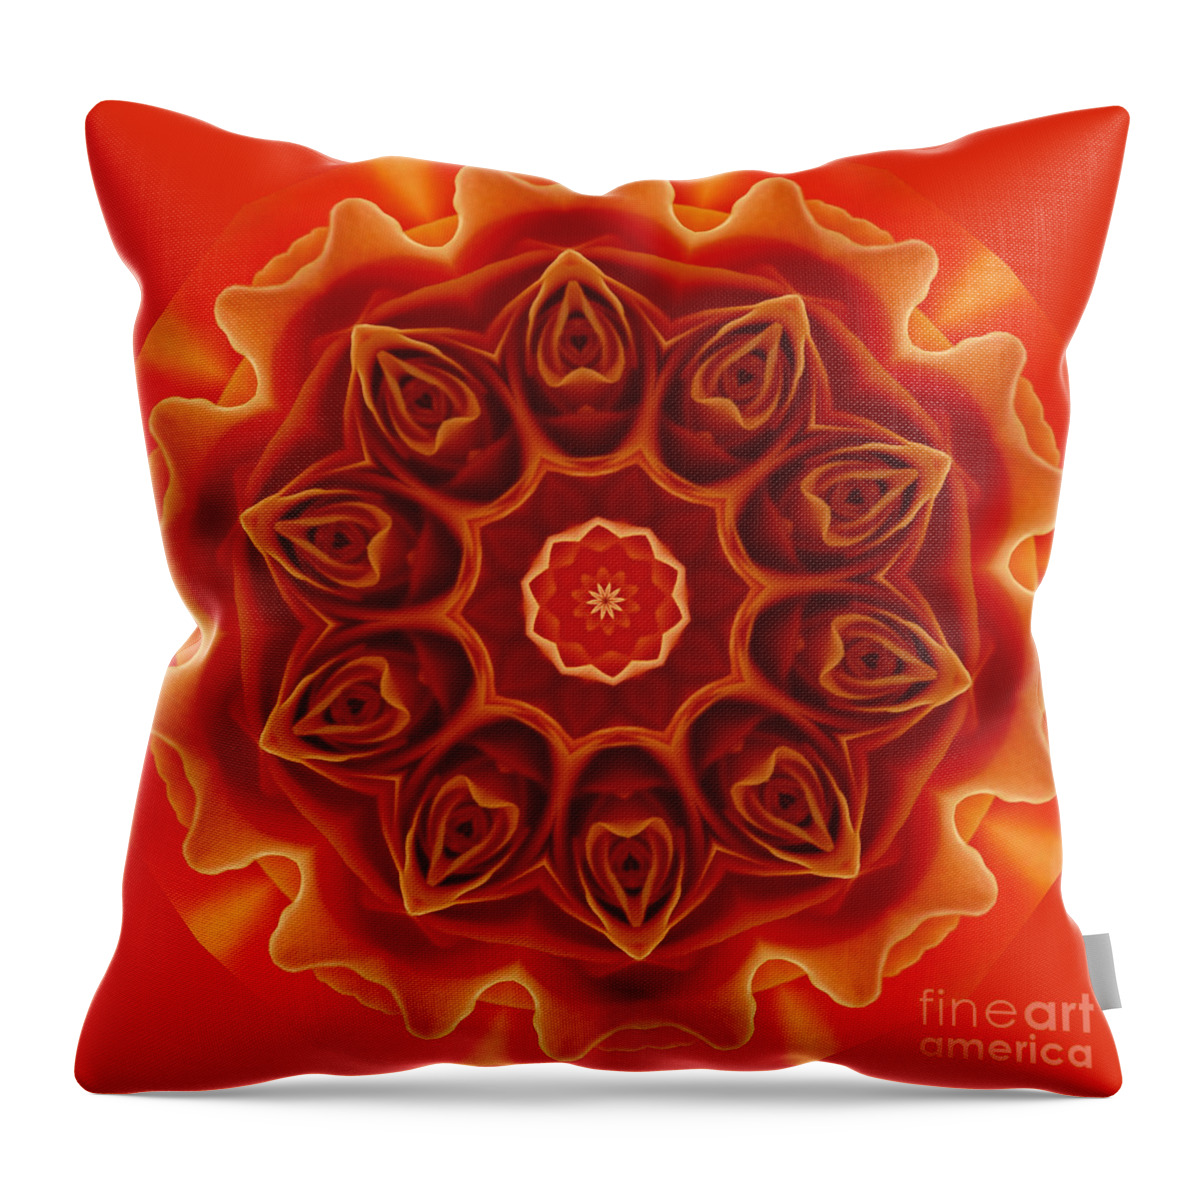 Flower Throw Pillow featuring the digital art Orange Rose Mandala by Julia Underwood